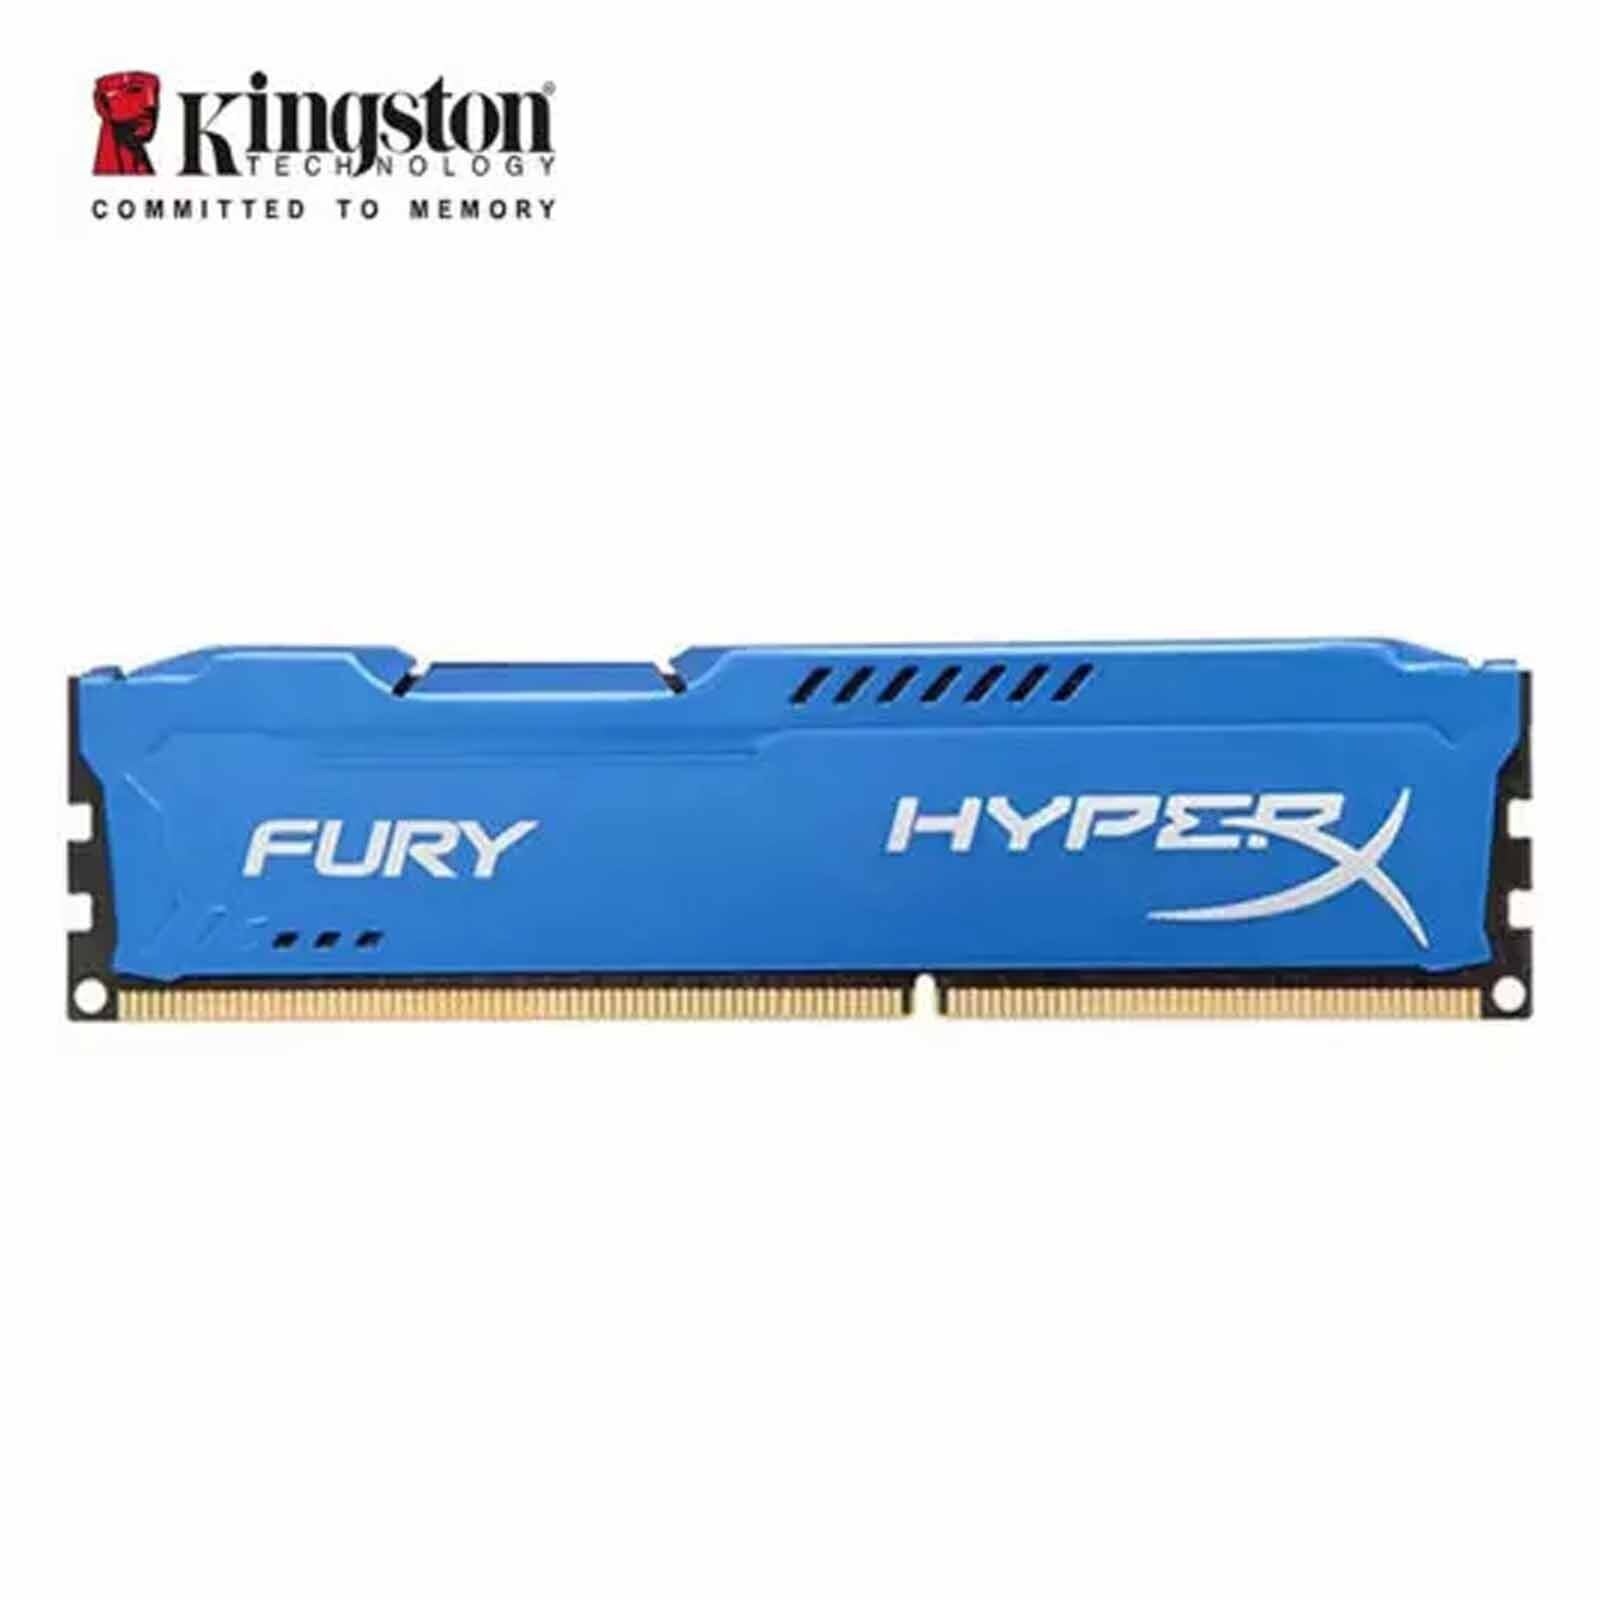 HyperX FURY DDR3 32GB (4 x 8GB) 1600MHz PC3-12800 Desktop RAM Memory DIMM New